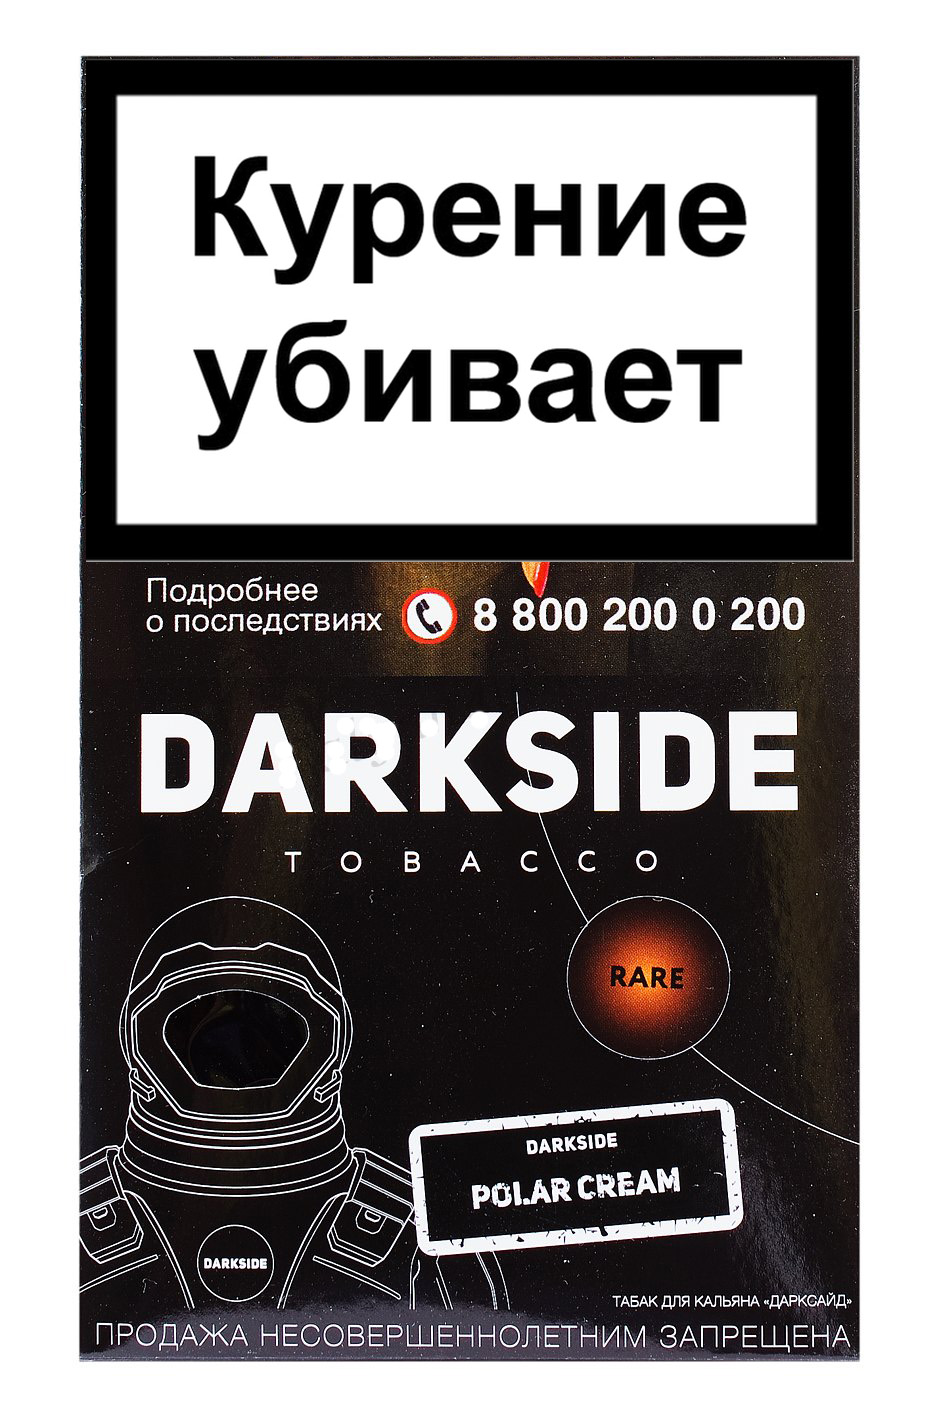 Табак для кальяна Dark Side Core. Dark Side Core табак вкусы. Dark Side табак rare вкусы. Табак для кальяна Darkside Core - Dark passion 100 гр.. Dark side купить